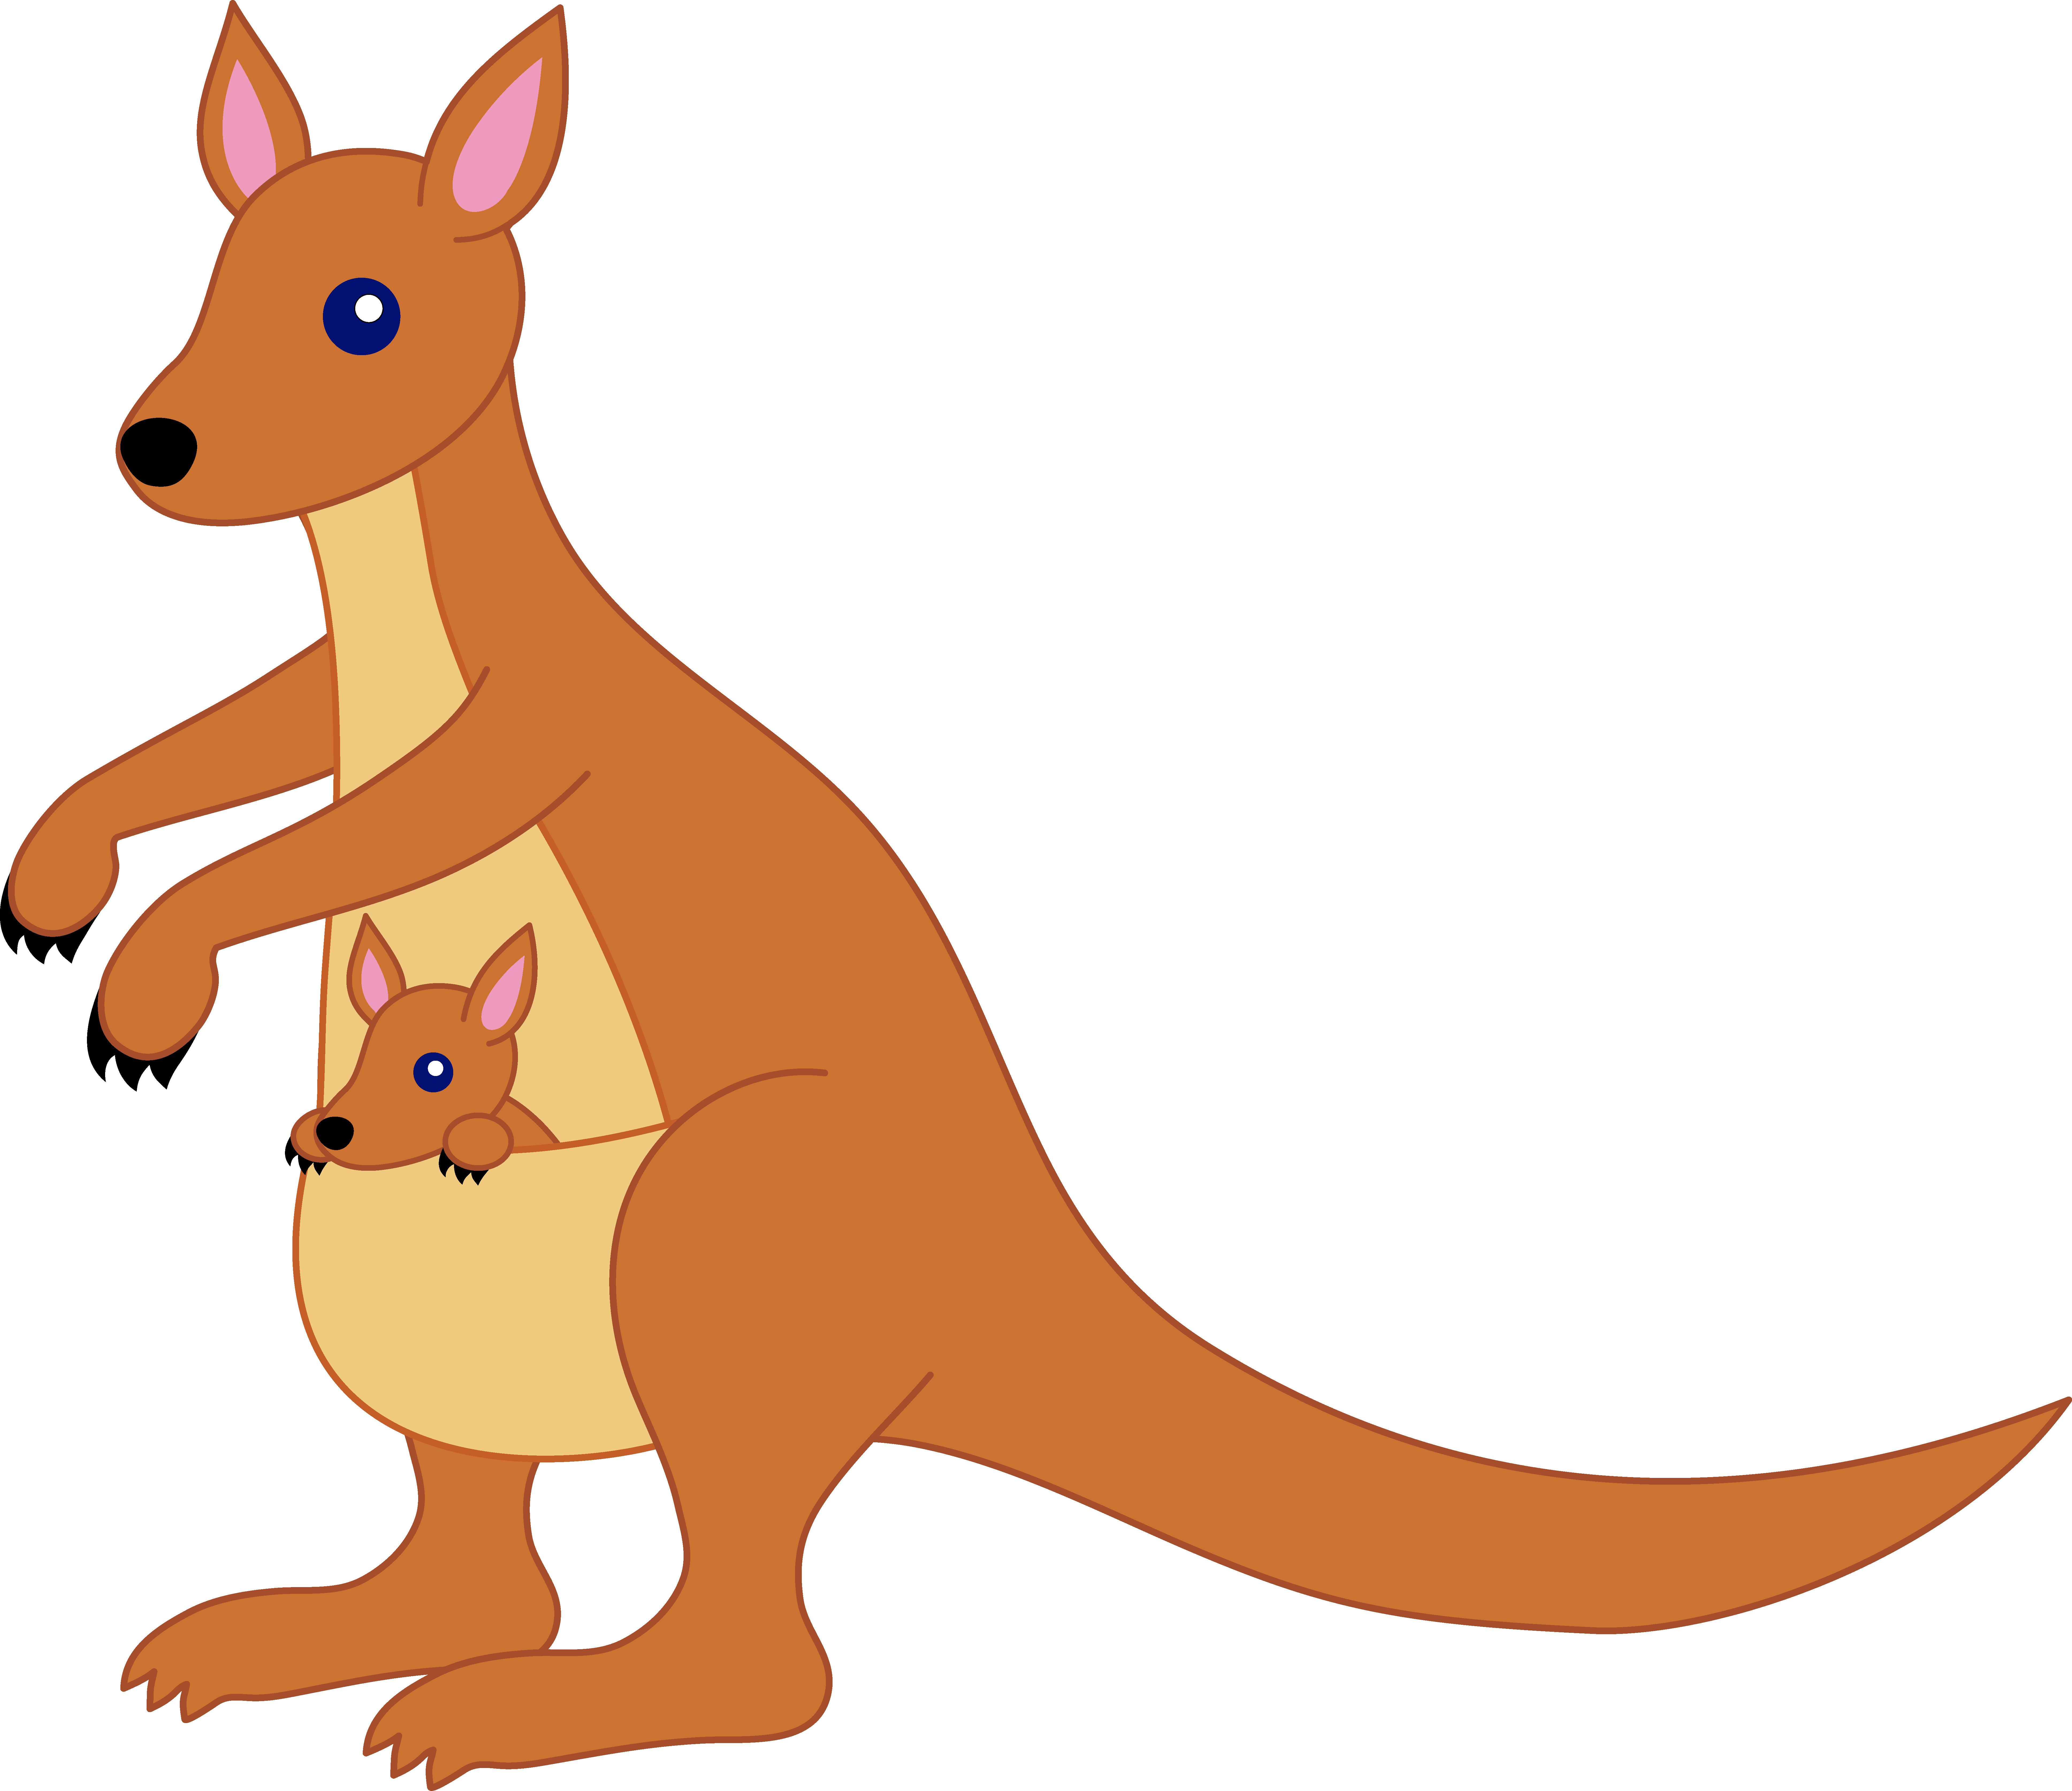 Kangaroo joey clipart.